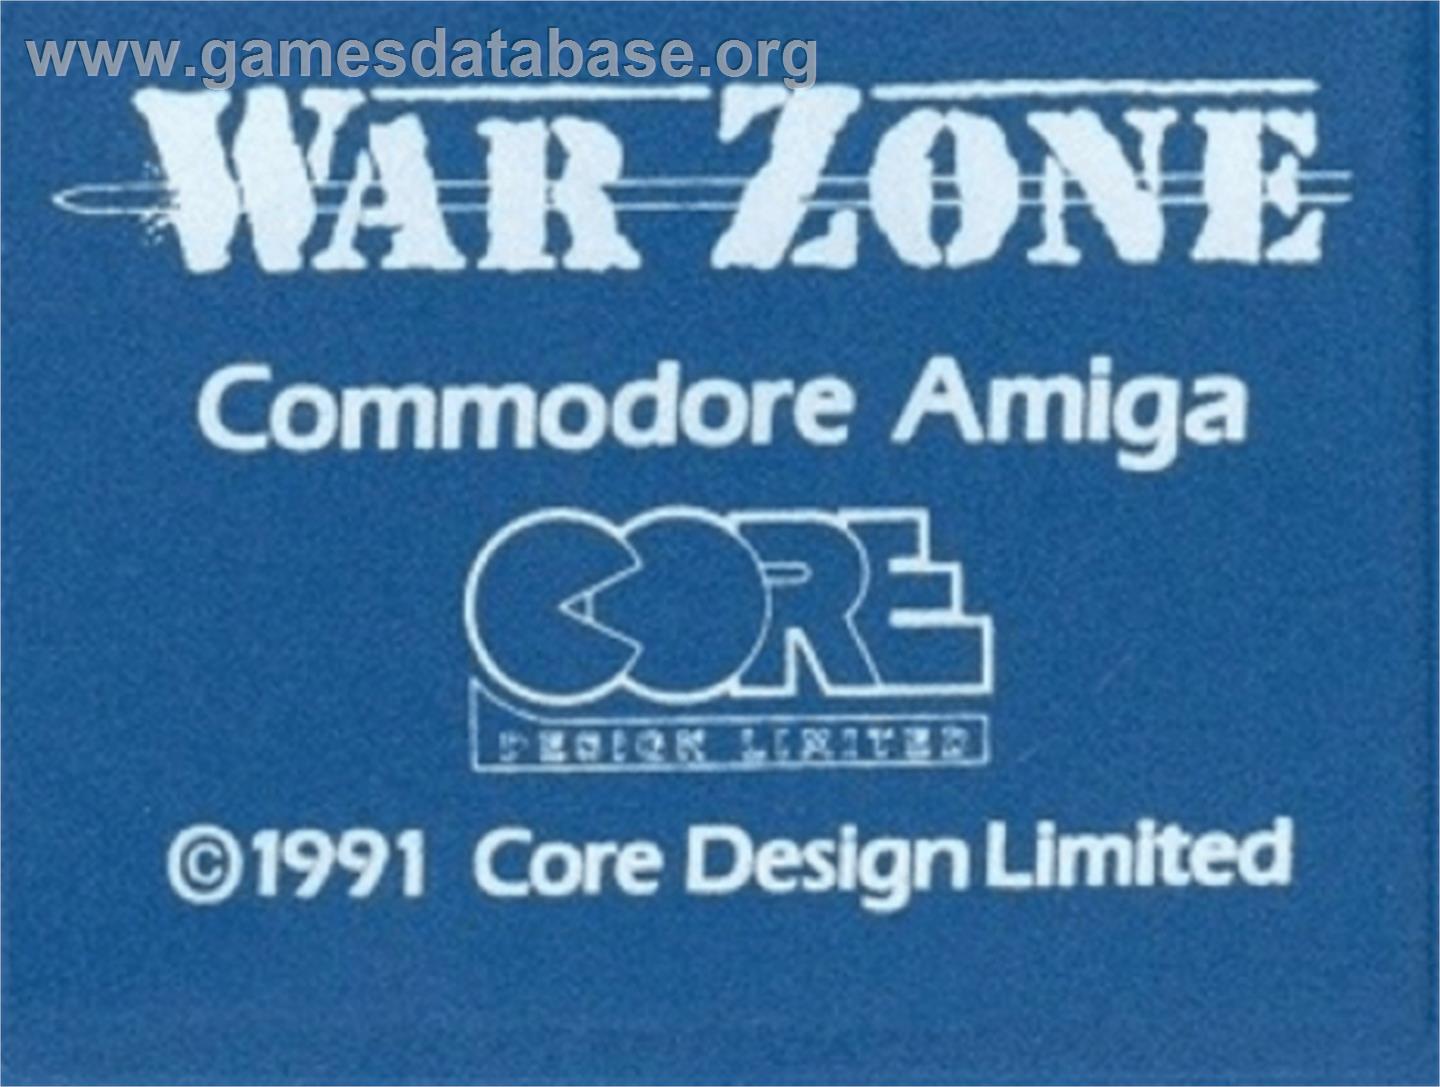 War Zone - Commodore Amiga - Artwork - Cartridge Top